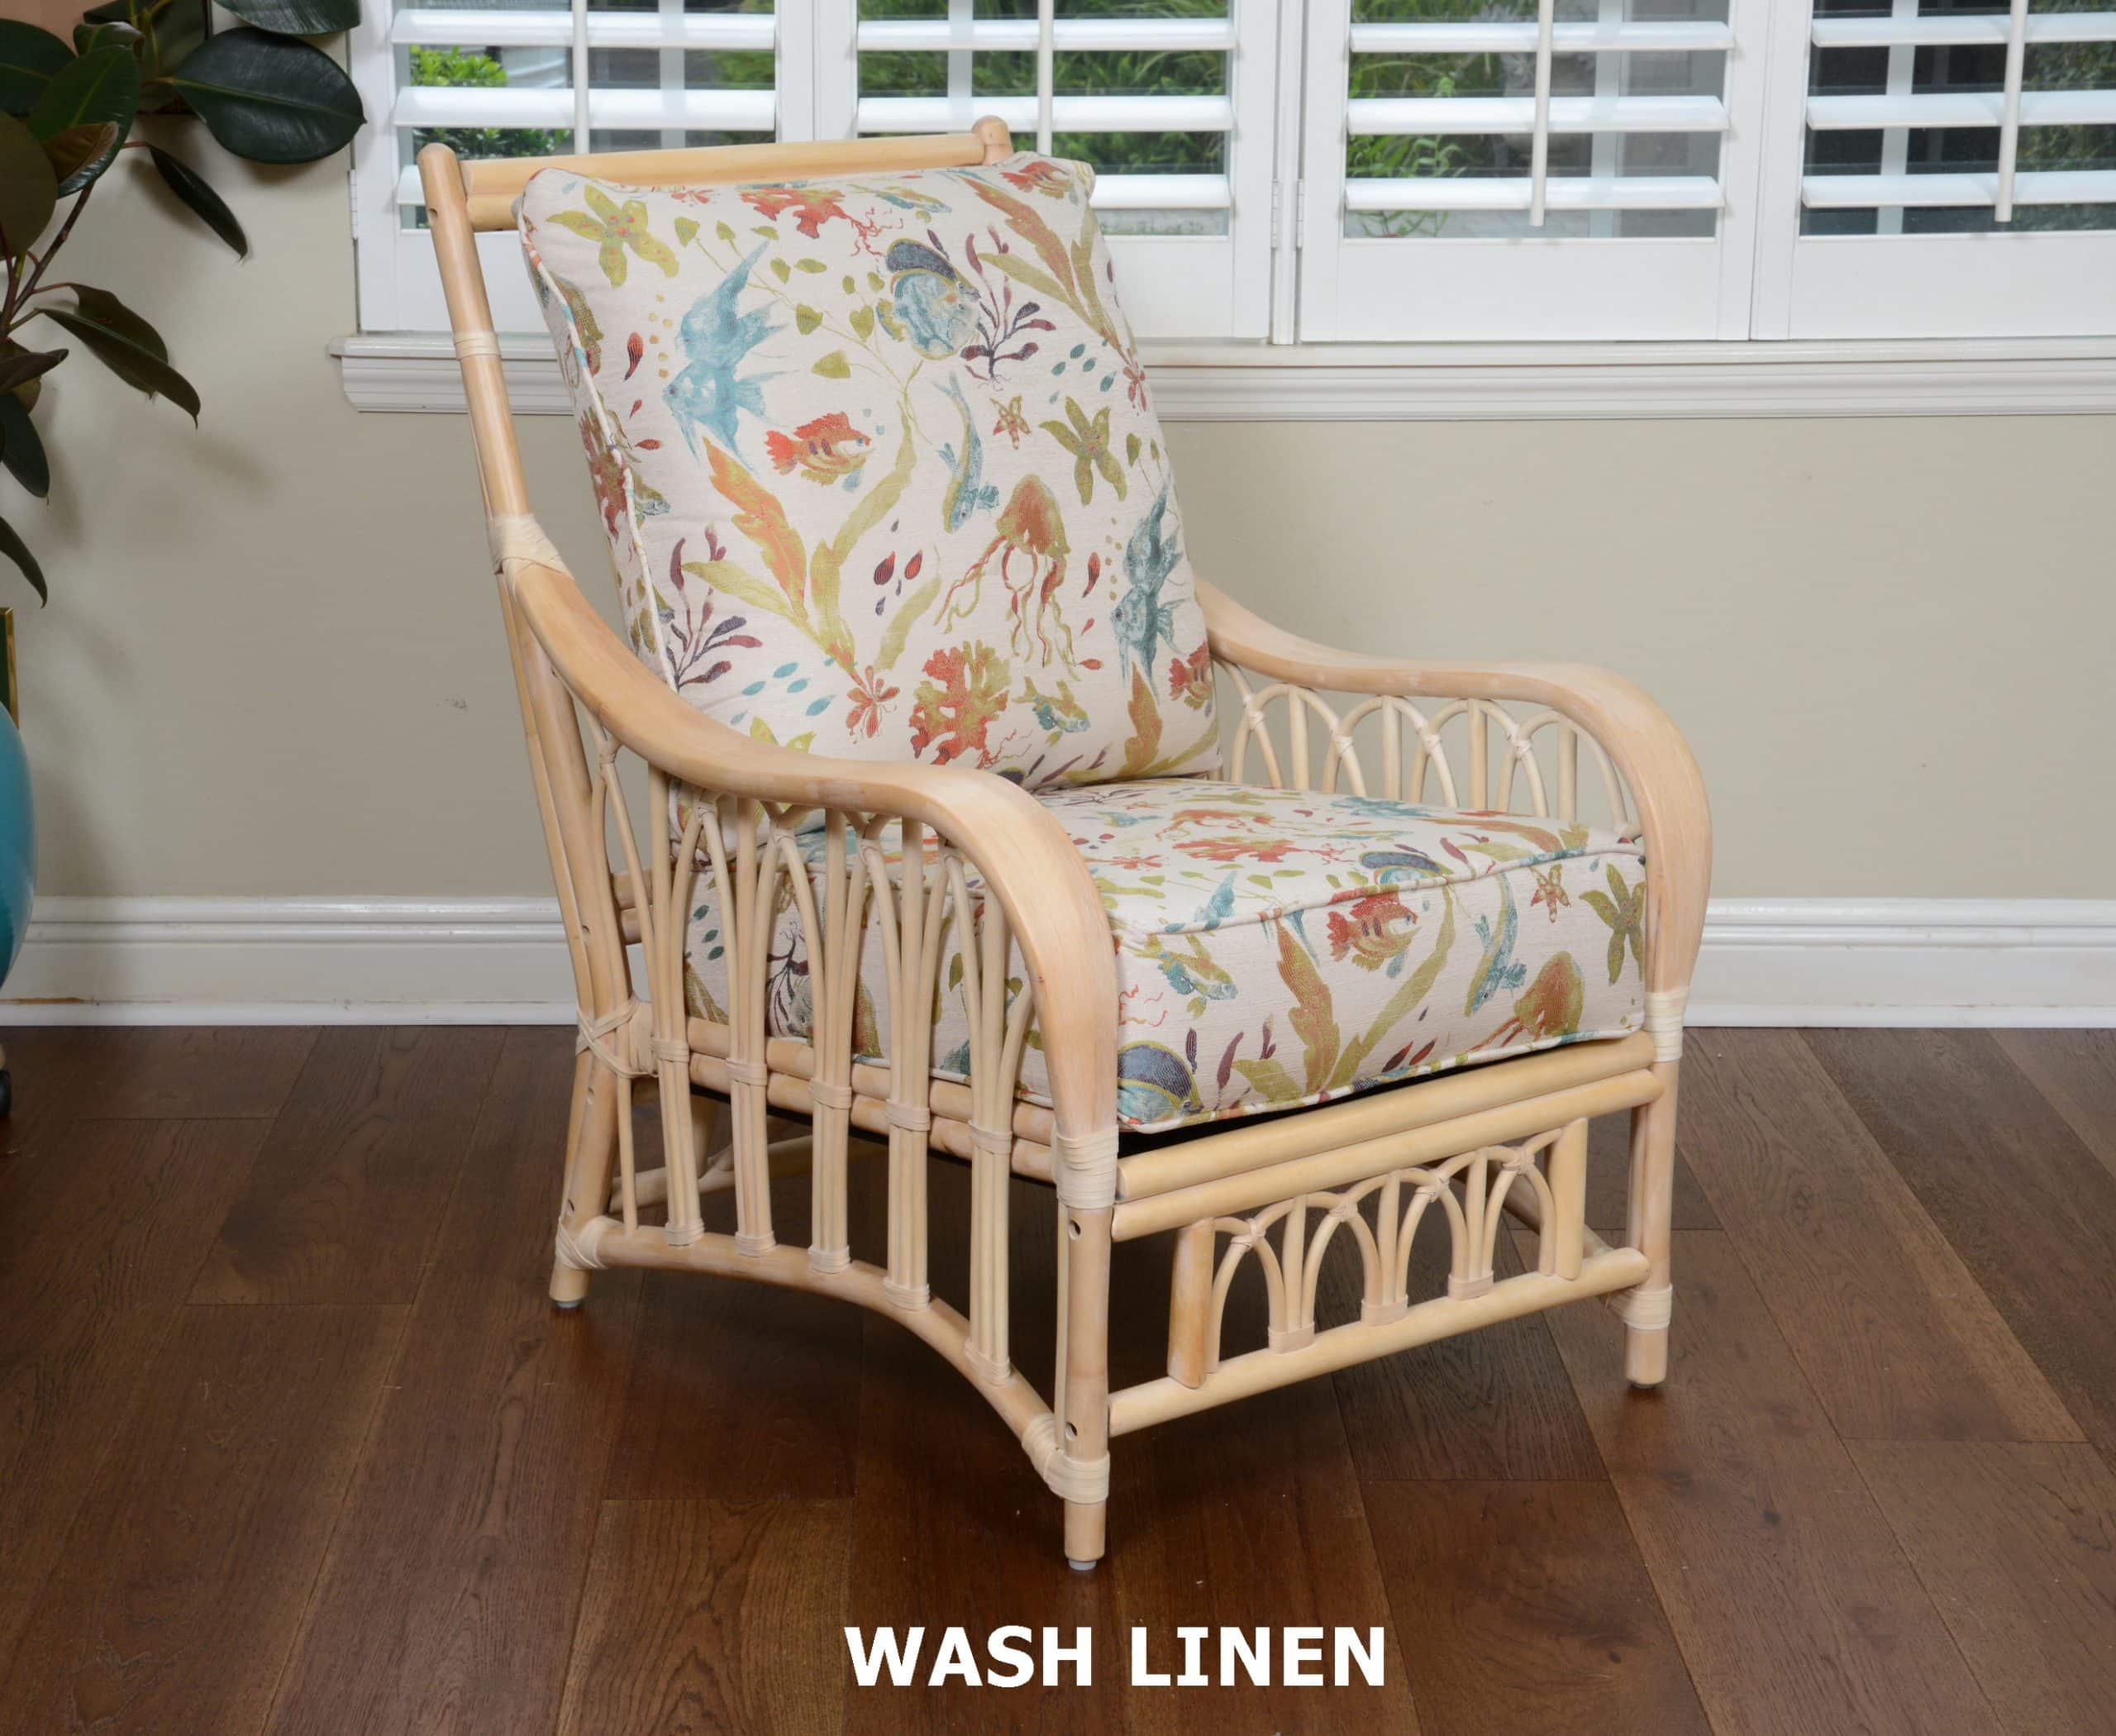 Cuba Lounge Chair in Wash Linen